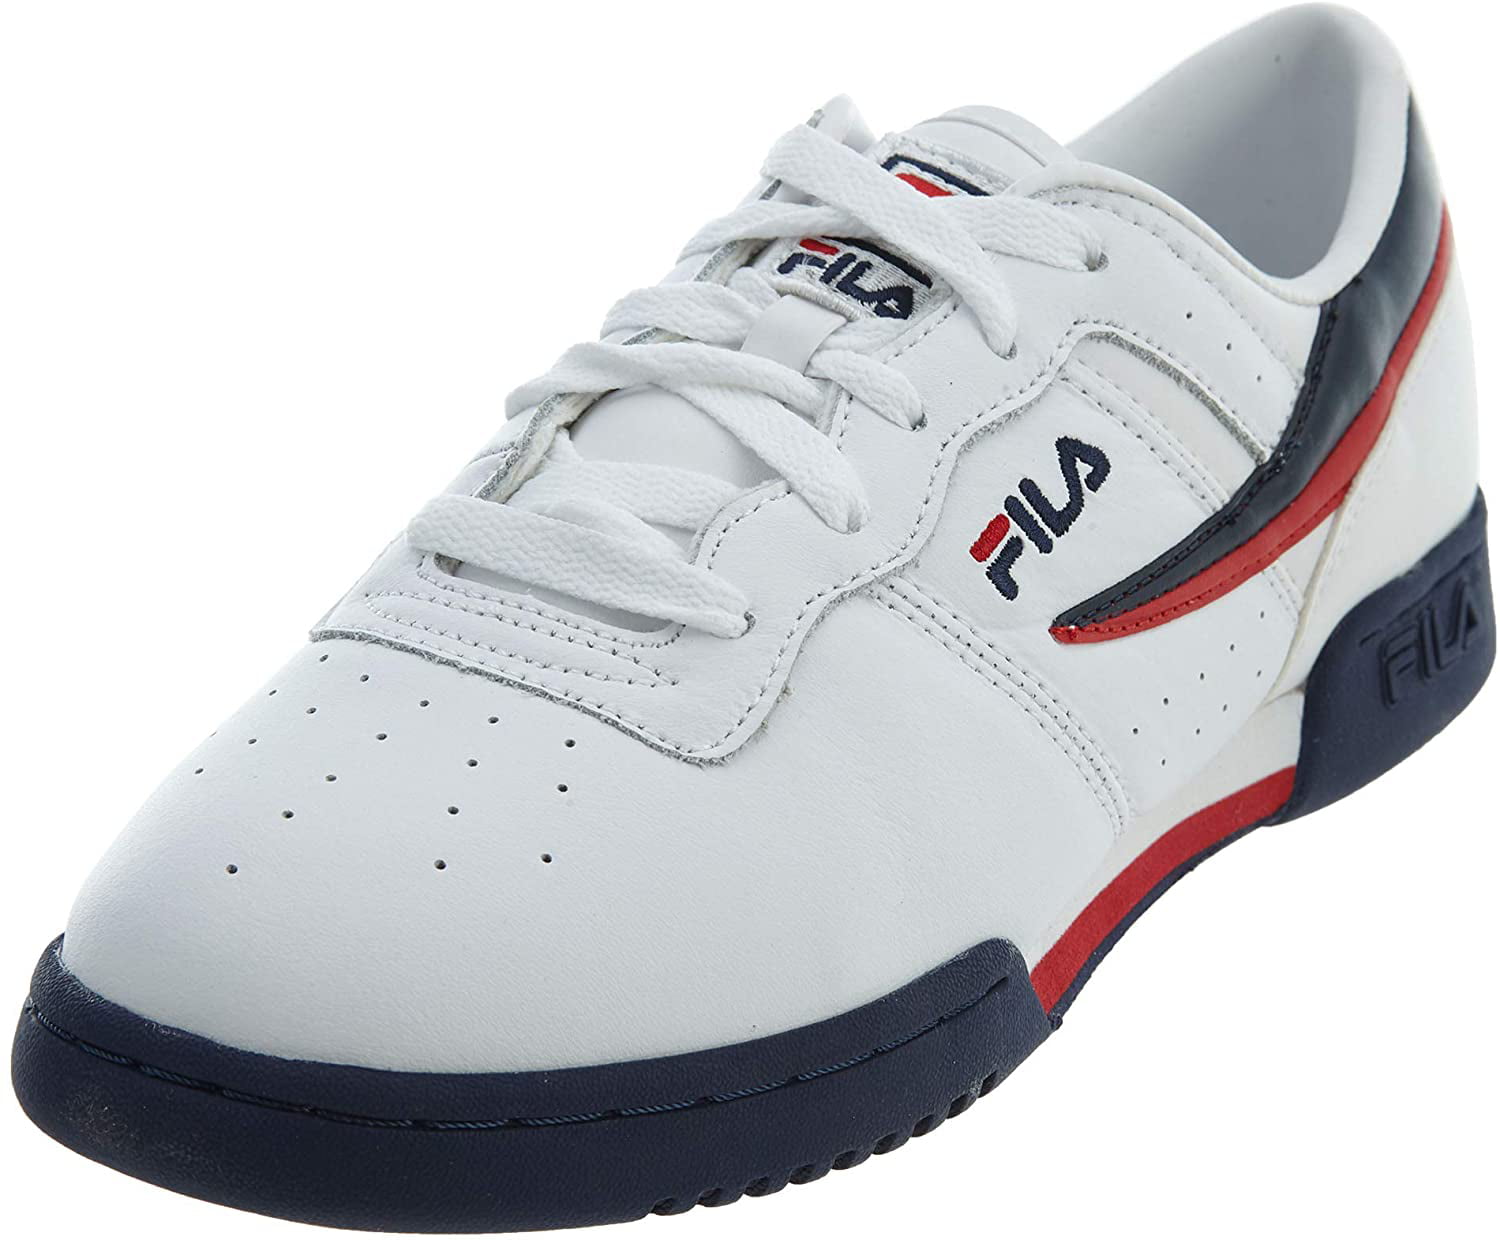 Fila Kid's Original Fitness Sneakers White / Fila Navy / Fila Red 5 ...